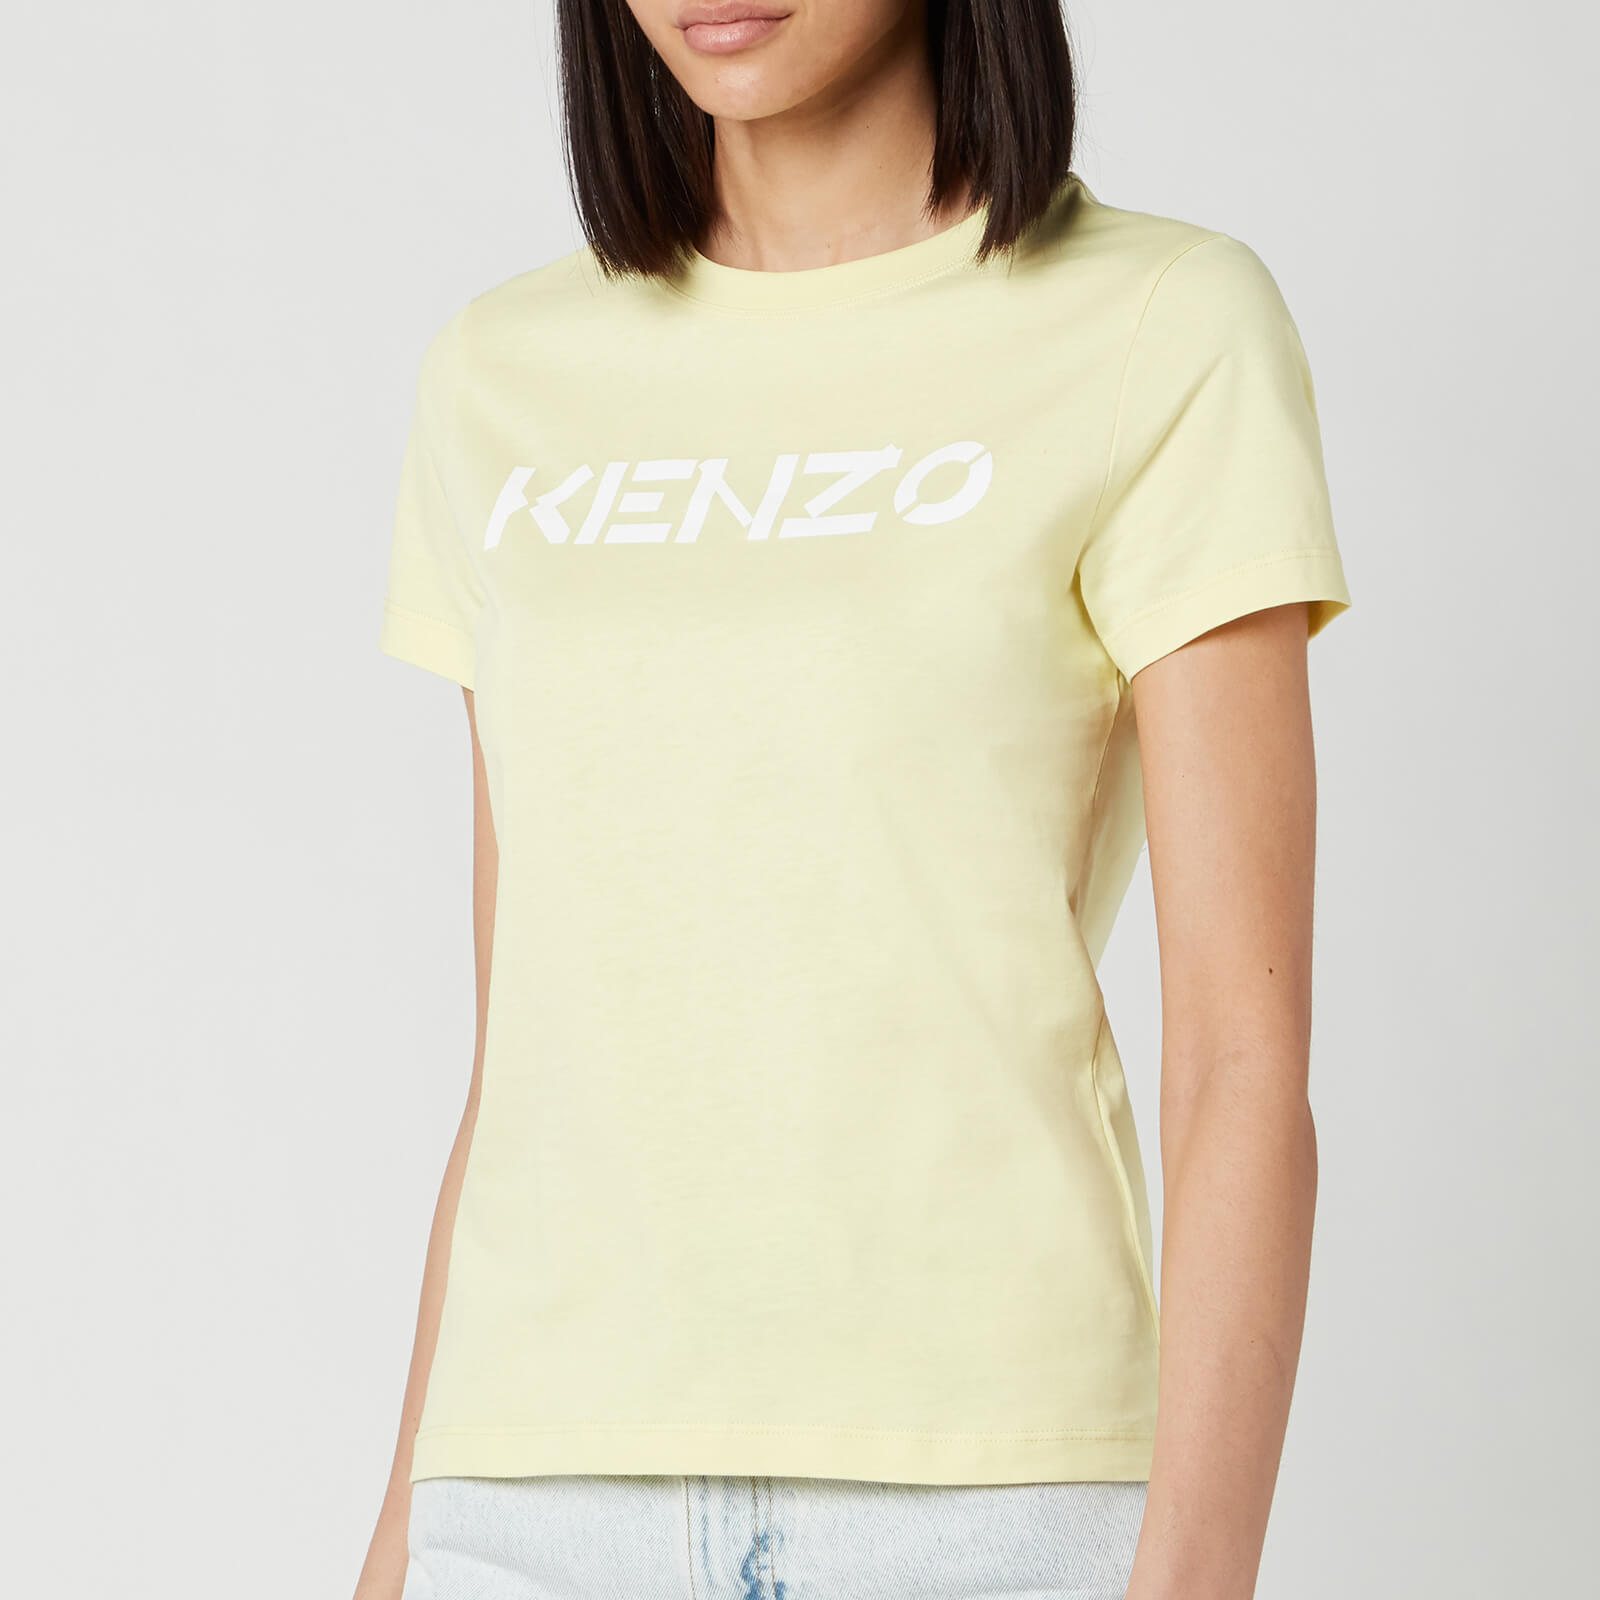 KENZO Women's KENZO Logo Classic T-Shirt - Vanilla - M